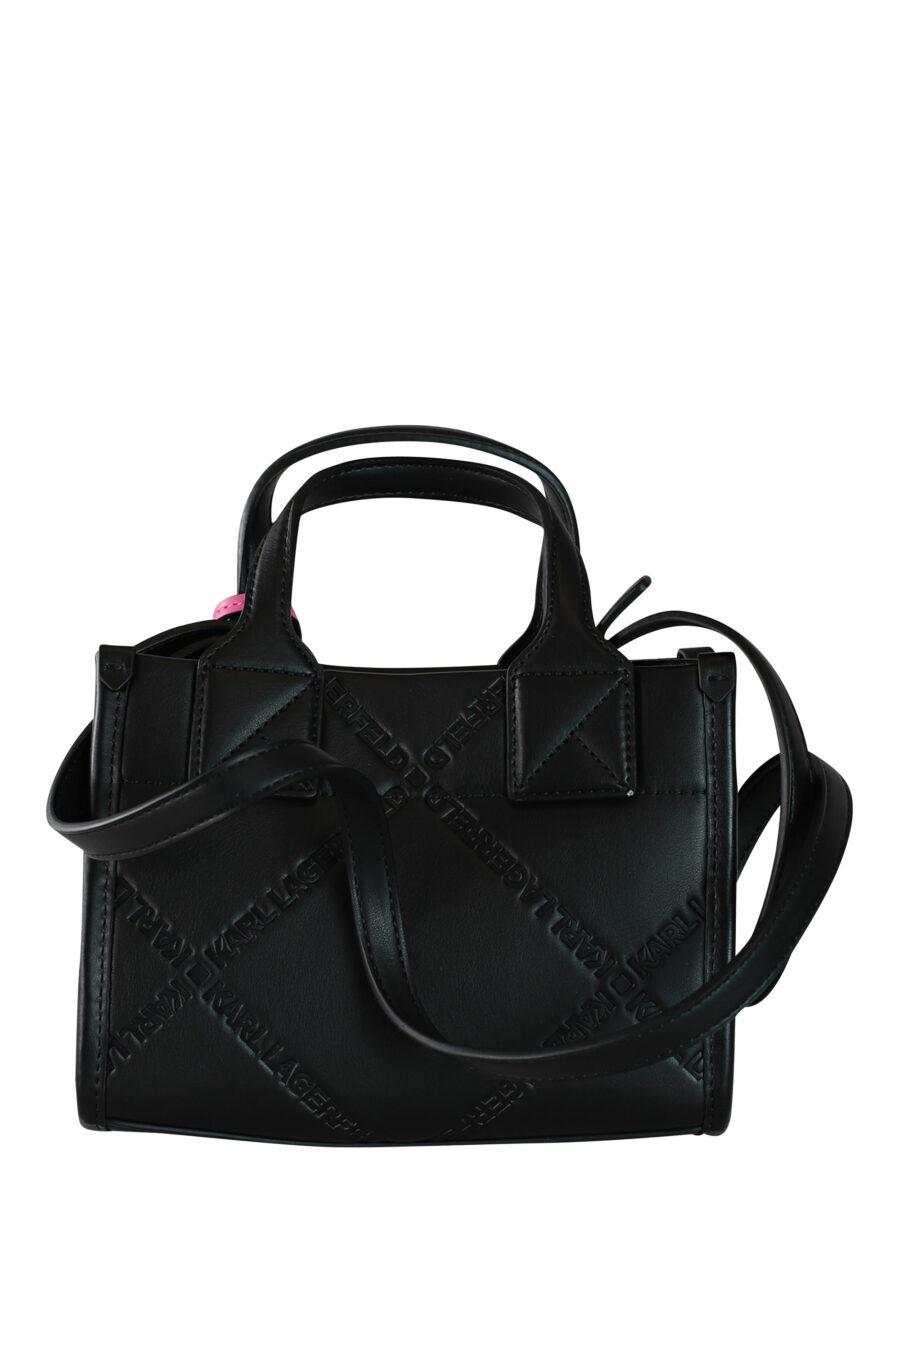 Tote bag mini negro /k/skuare/ con logo en relieve - 8720744102557 3